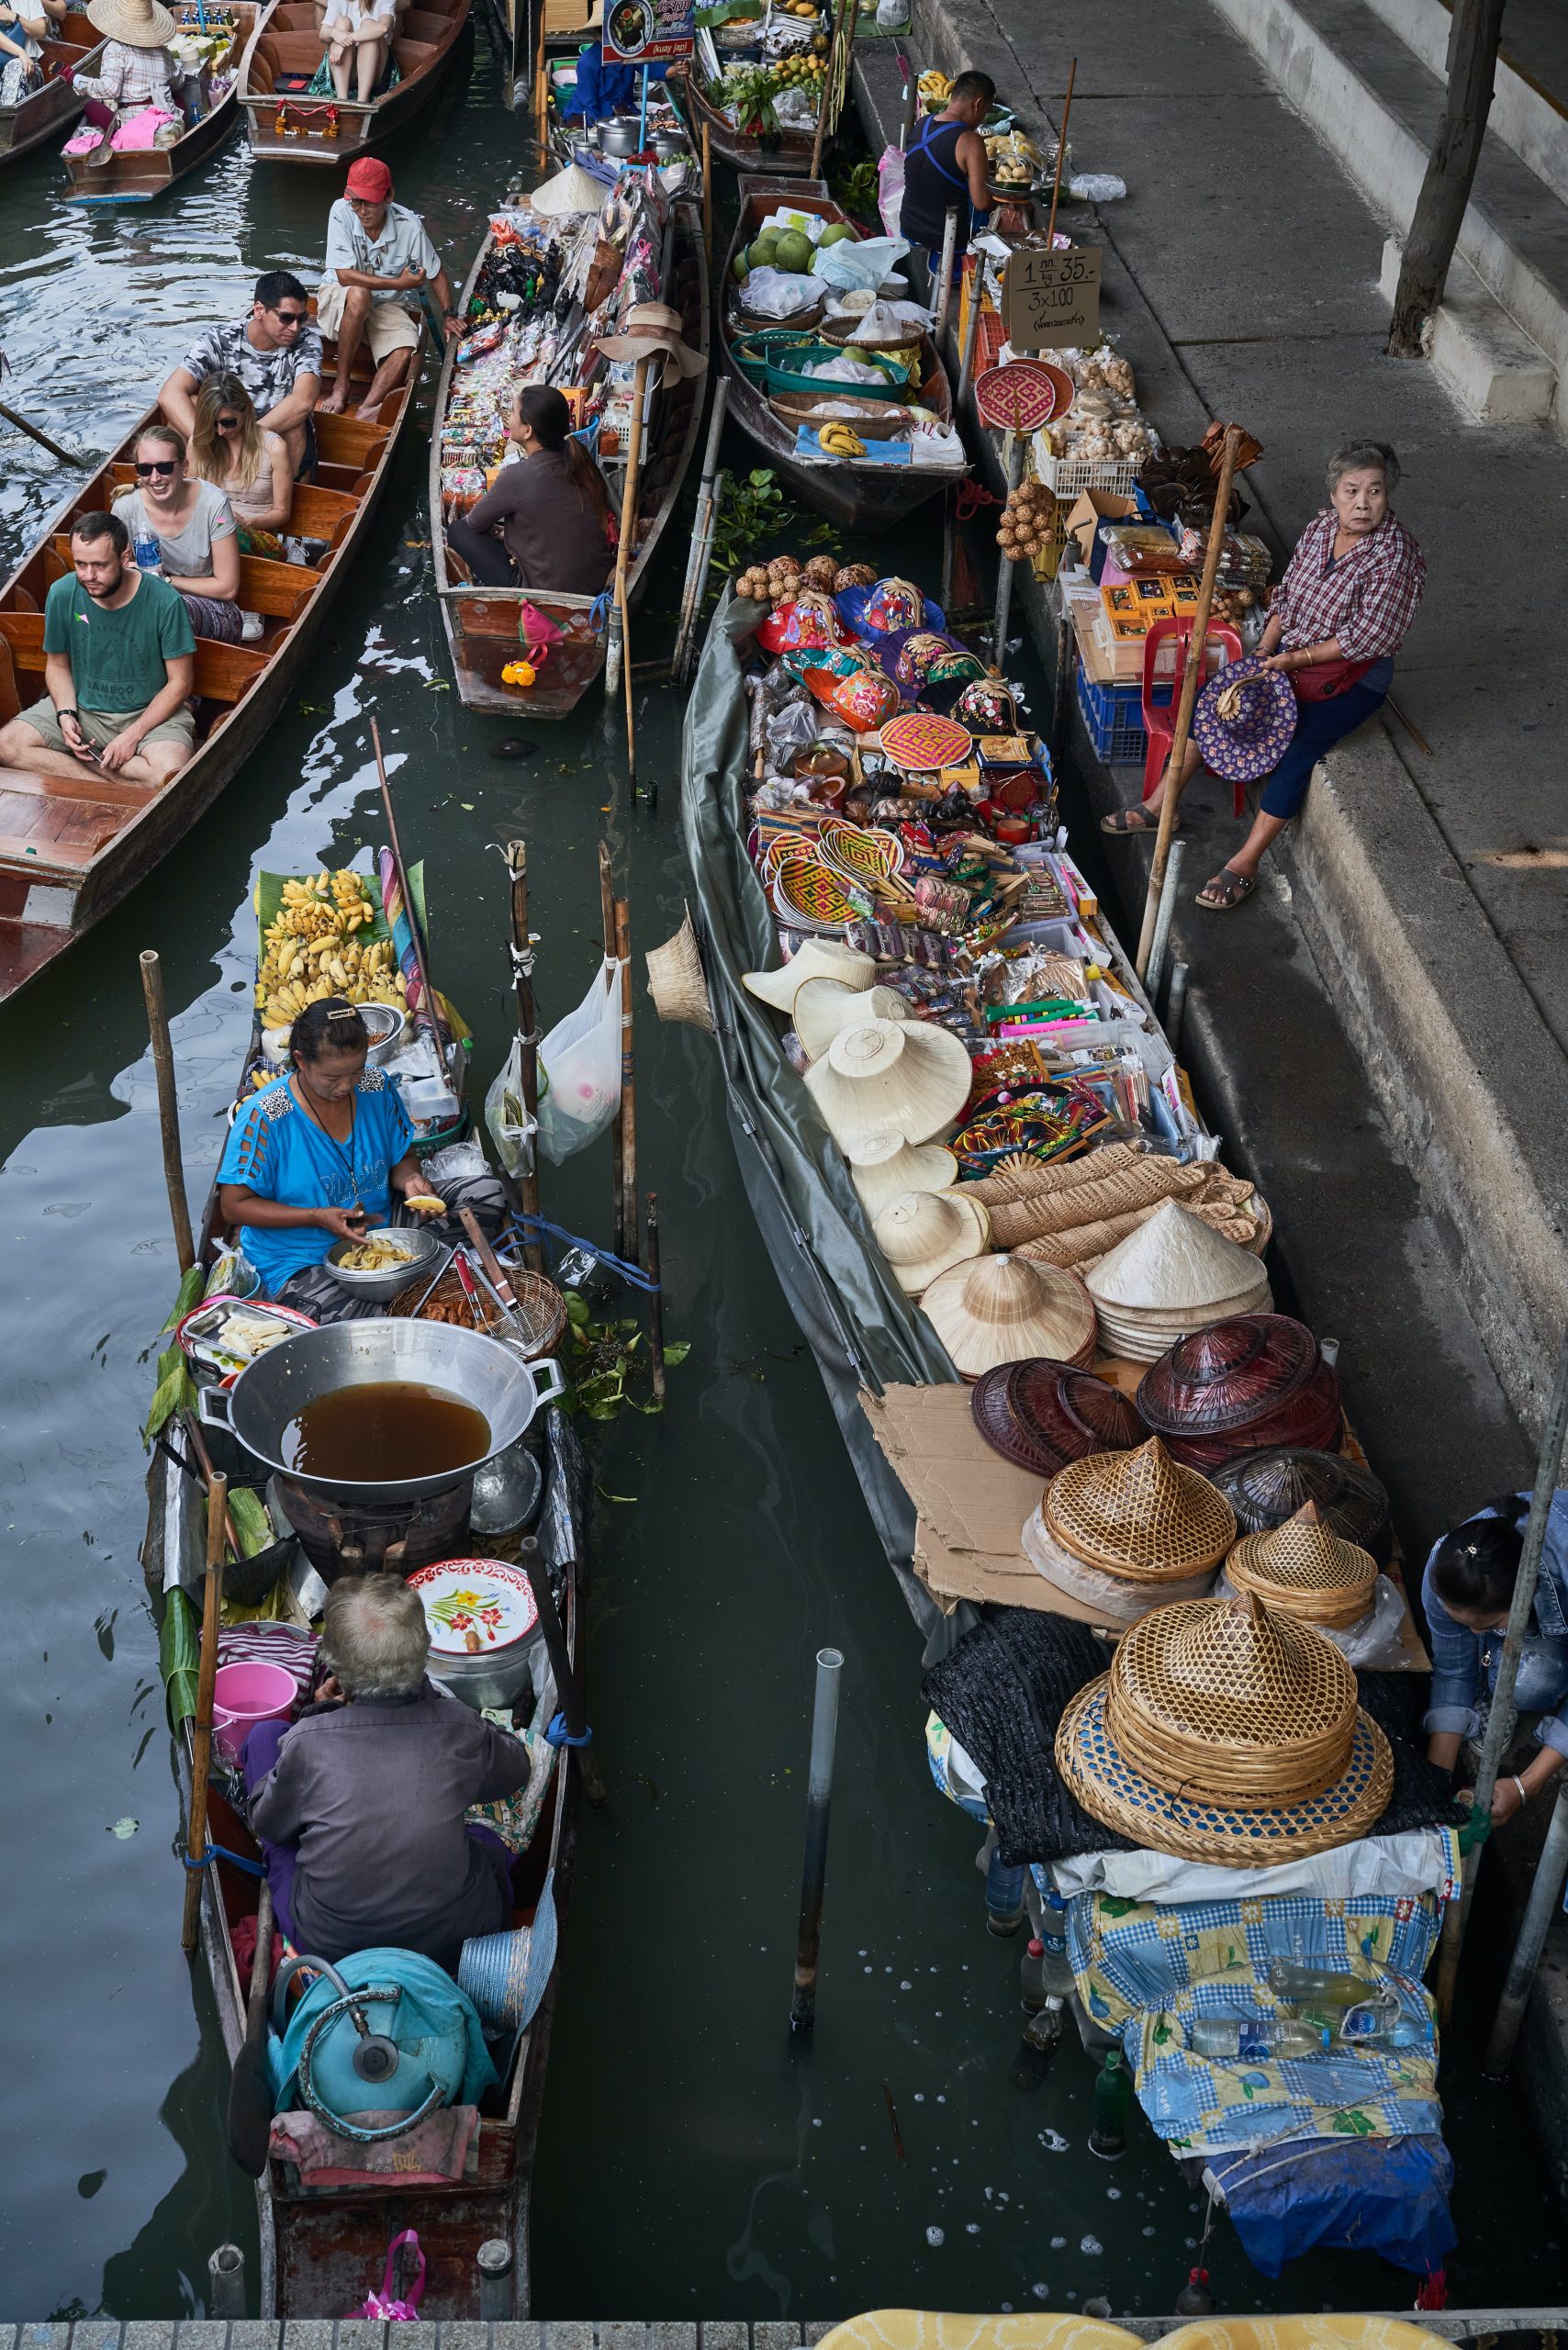 Sales boats at a floating market